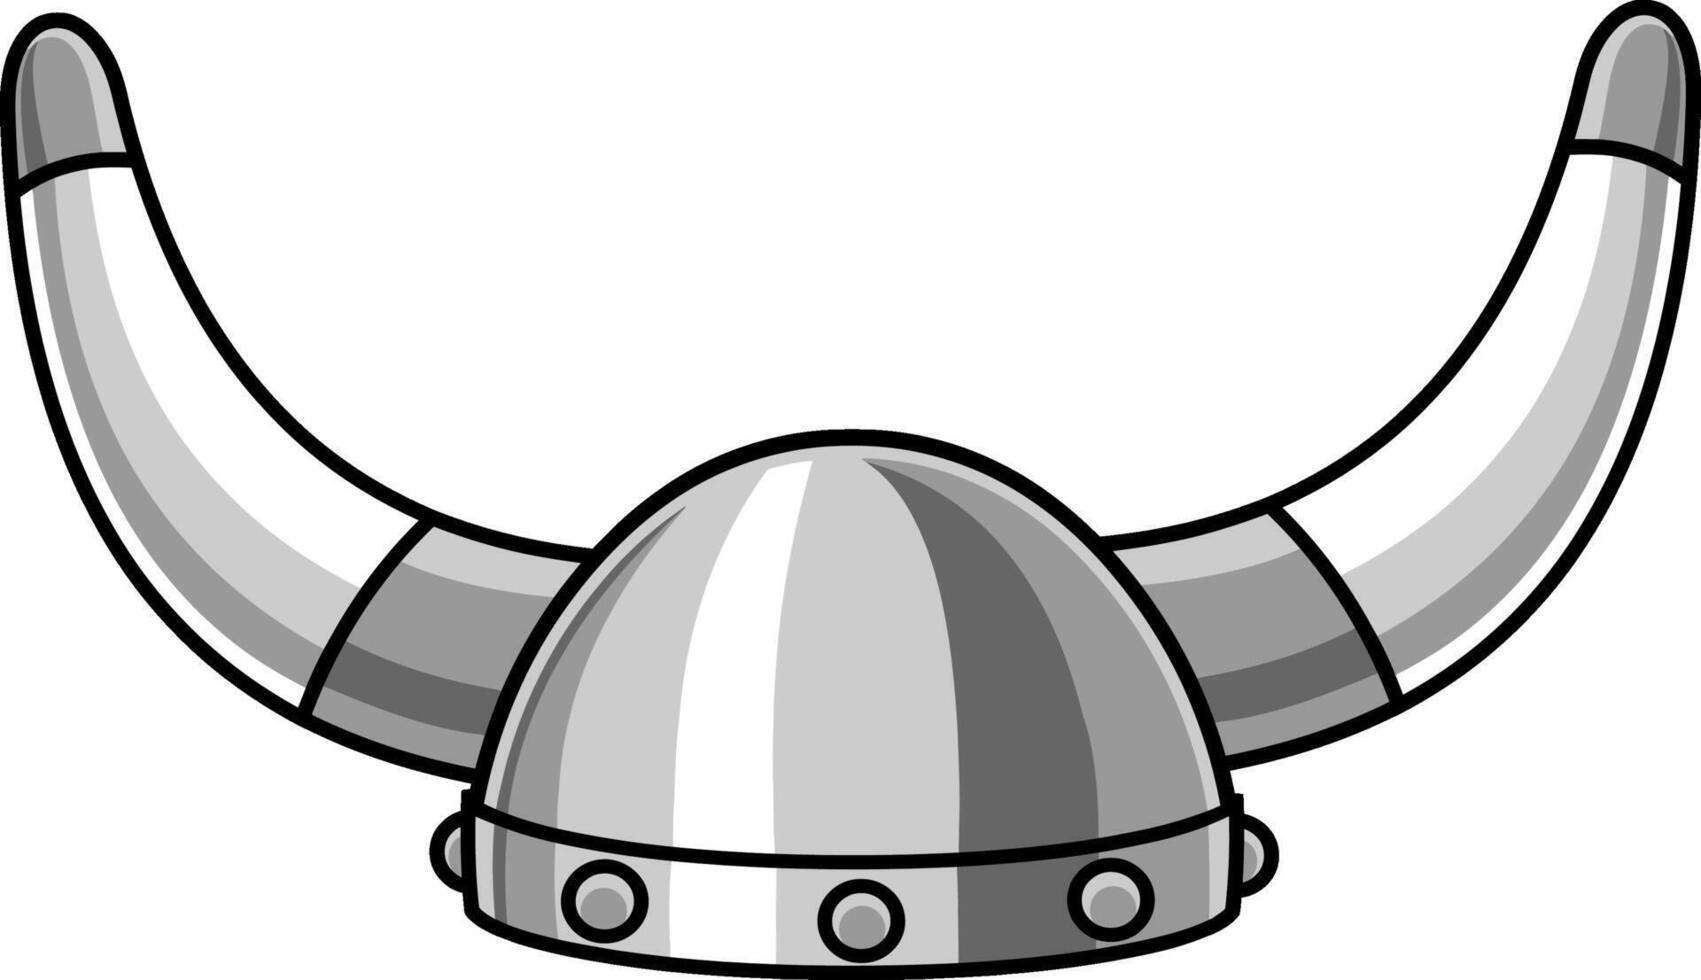 Cartoon Viking Helmet With Horns vector